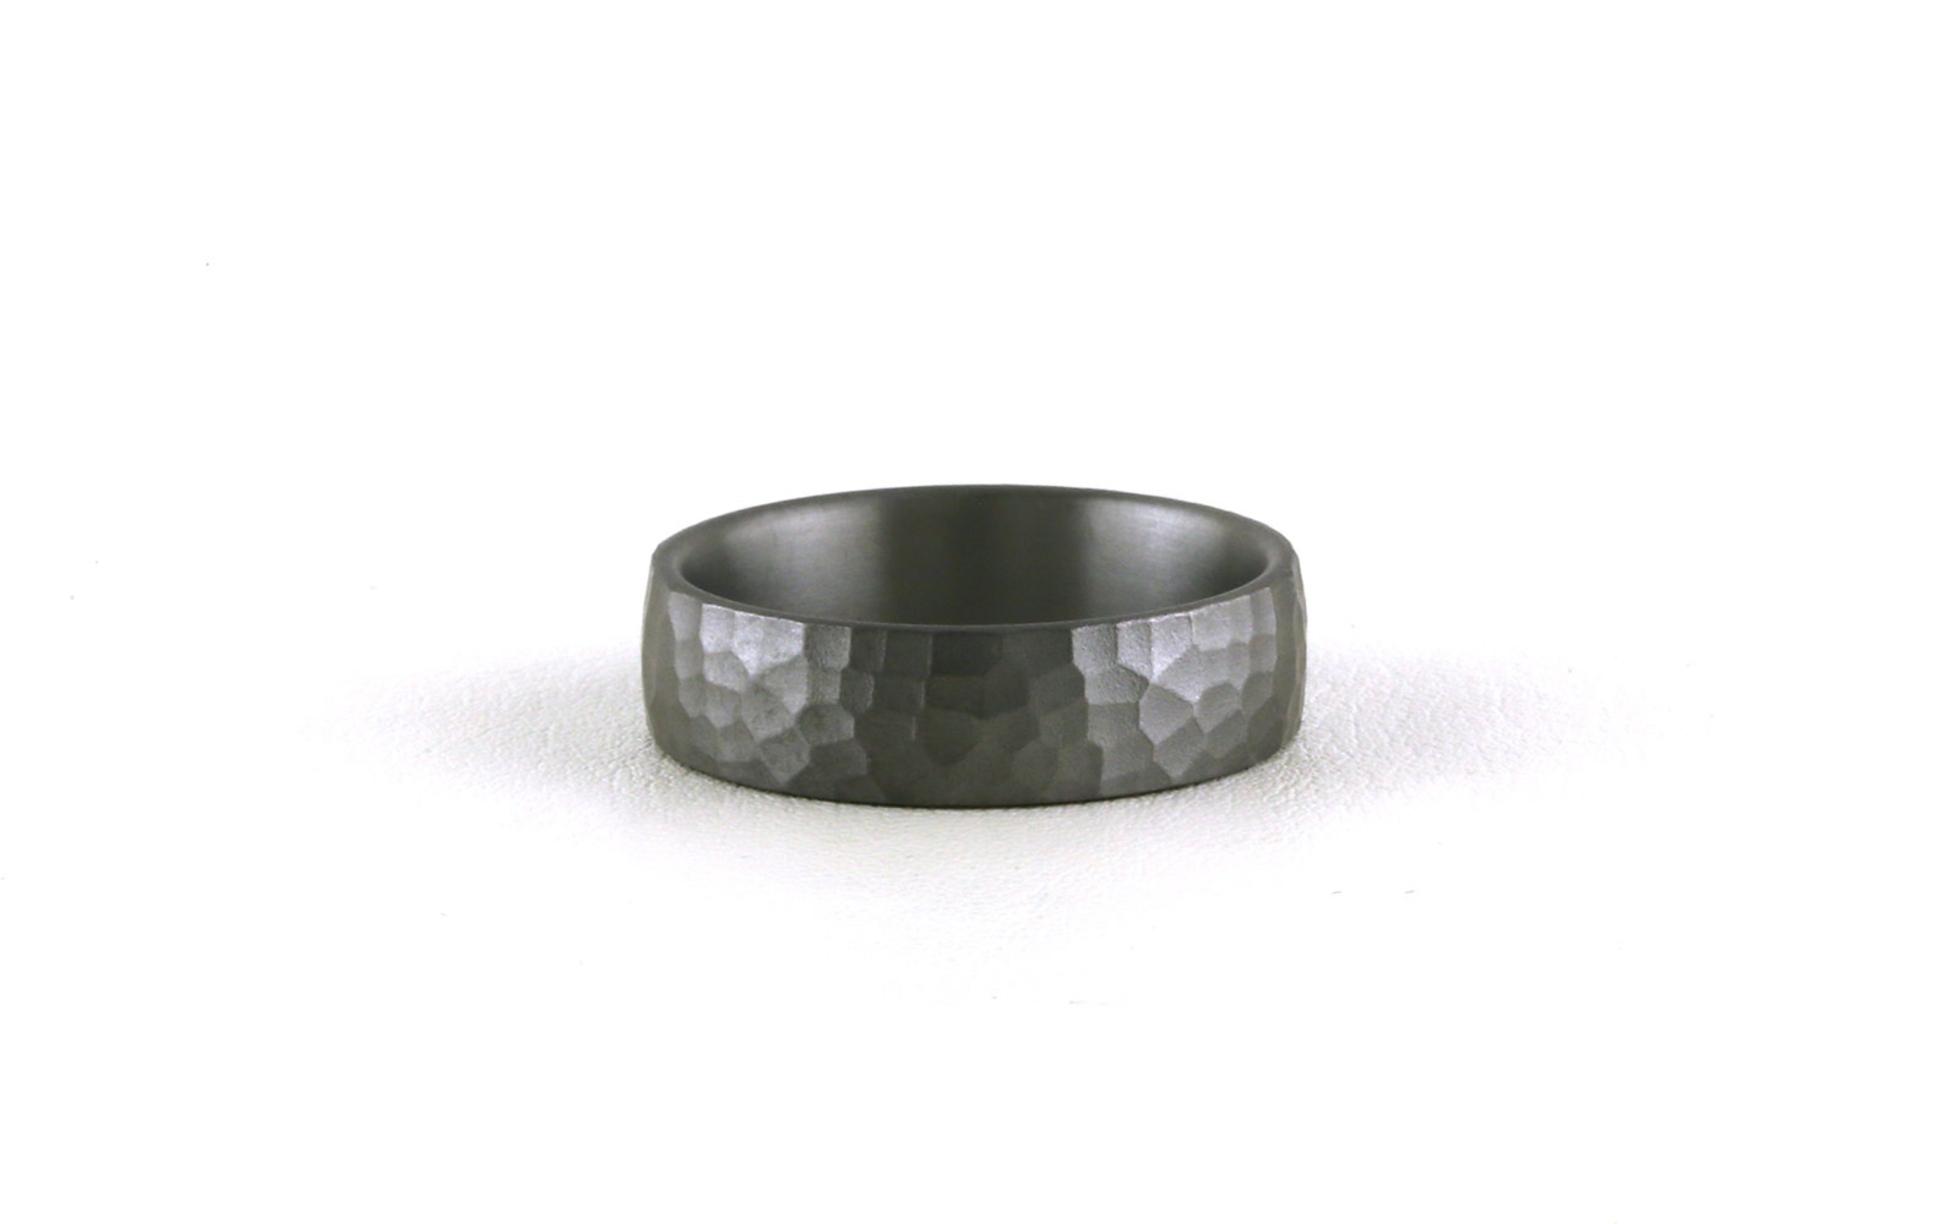 6mm Hammered Dome Ring in Dark Tantalum (sz 9.5)